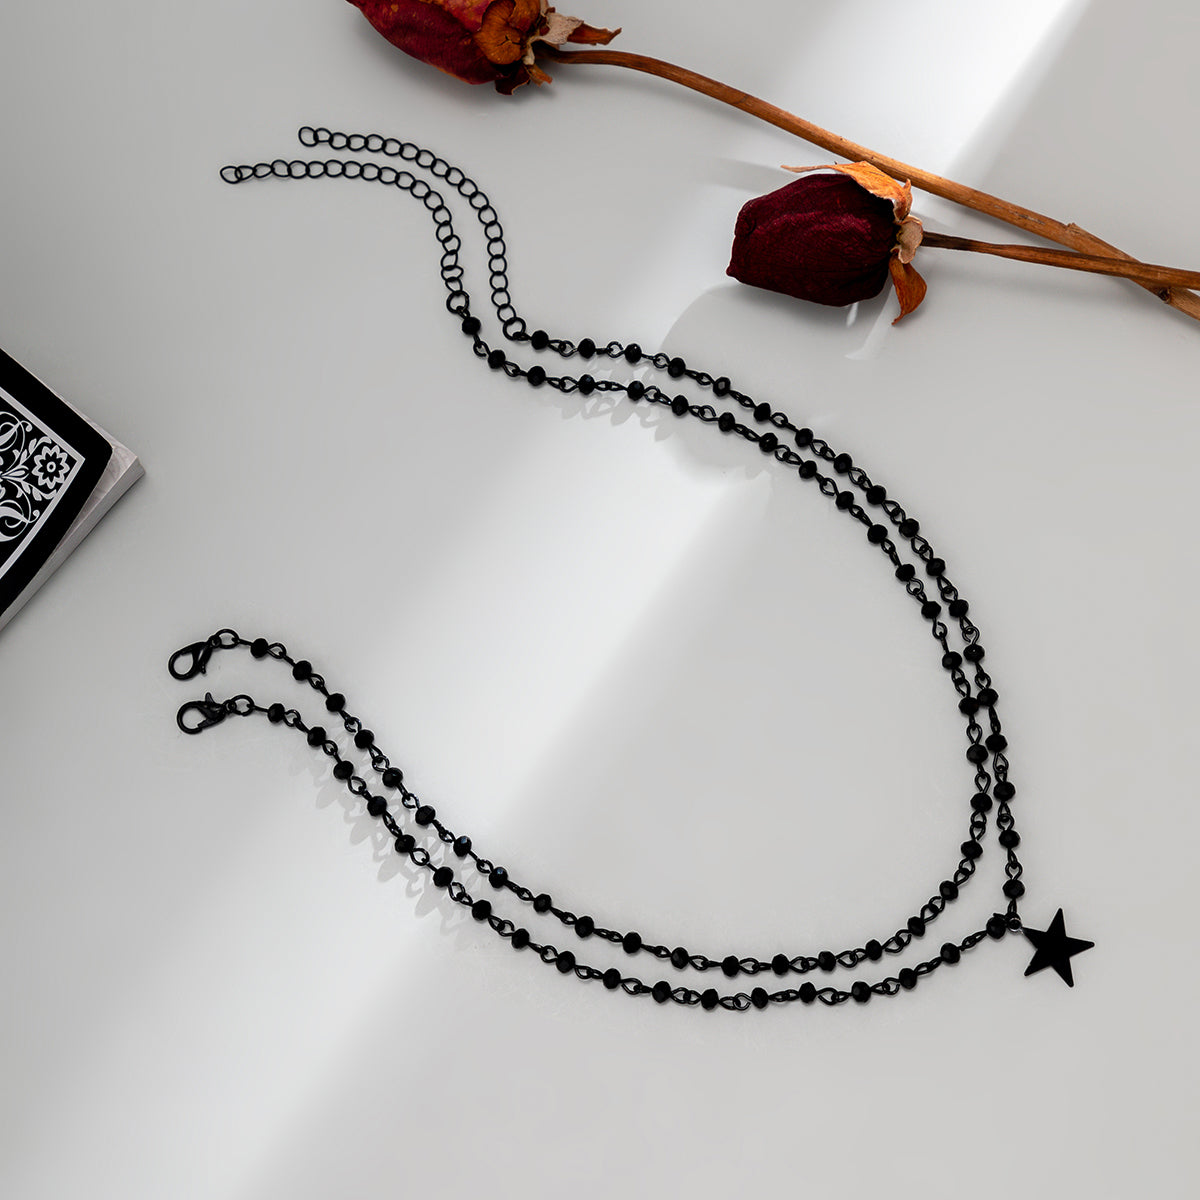 Black Star Pendant Necklace Set